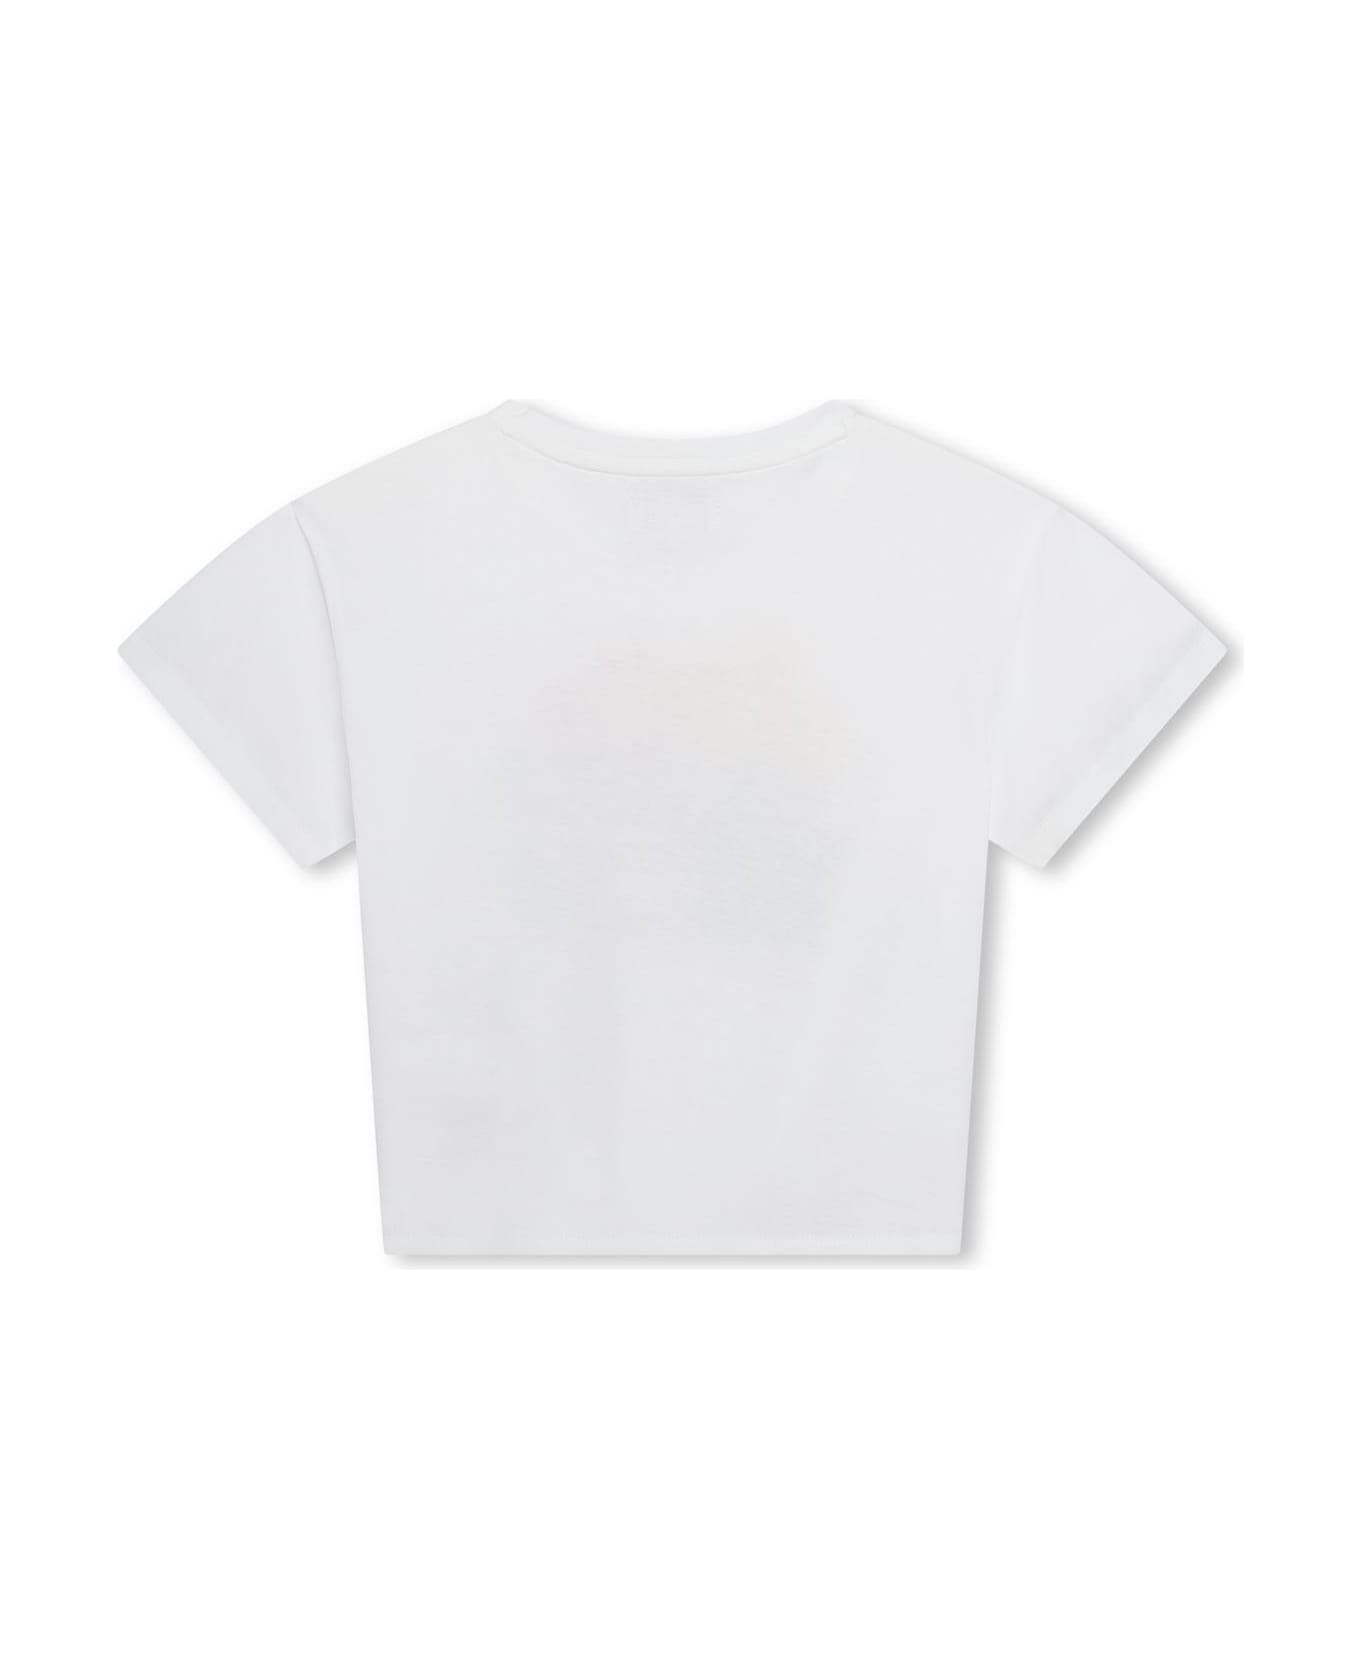 Sonia Rykiel T-shirt With Print - White